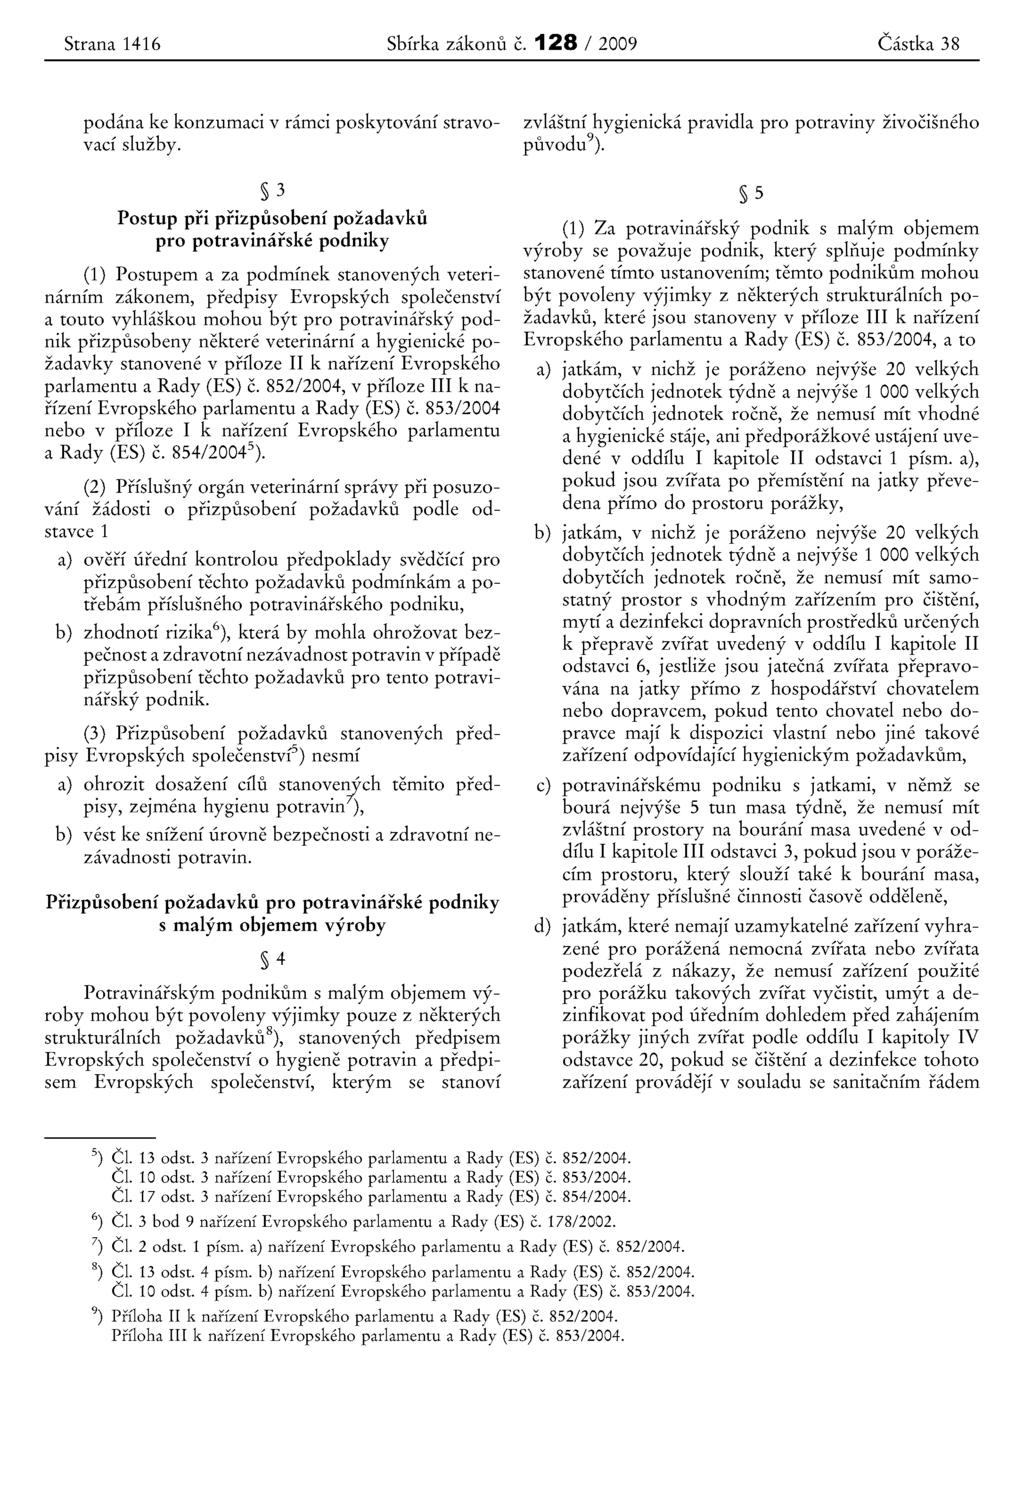 Strana 1416 Sbfrka zakonu e. 128 / 2009 Castka 38 podana ke konzumaci v ramci poskytovani stravovaci sluzby.